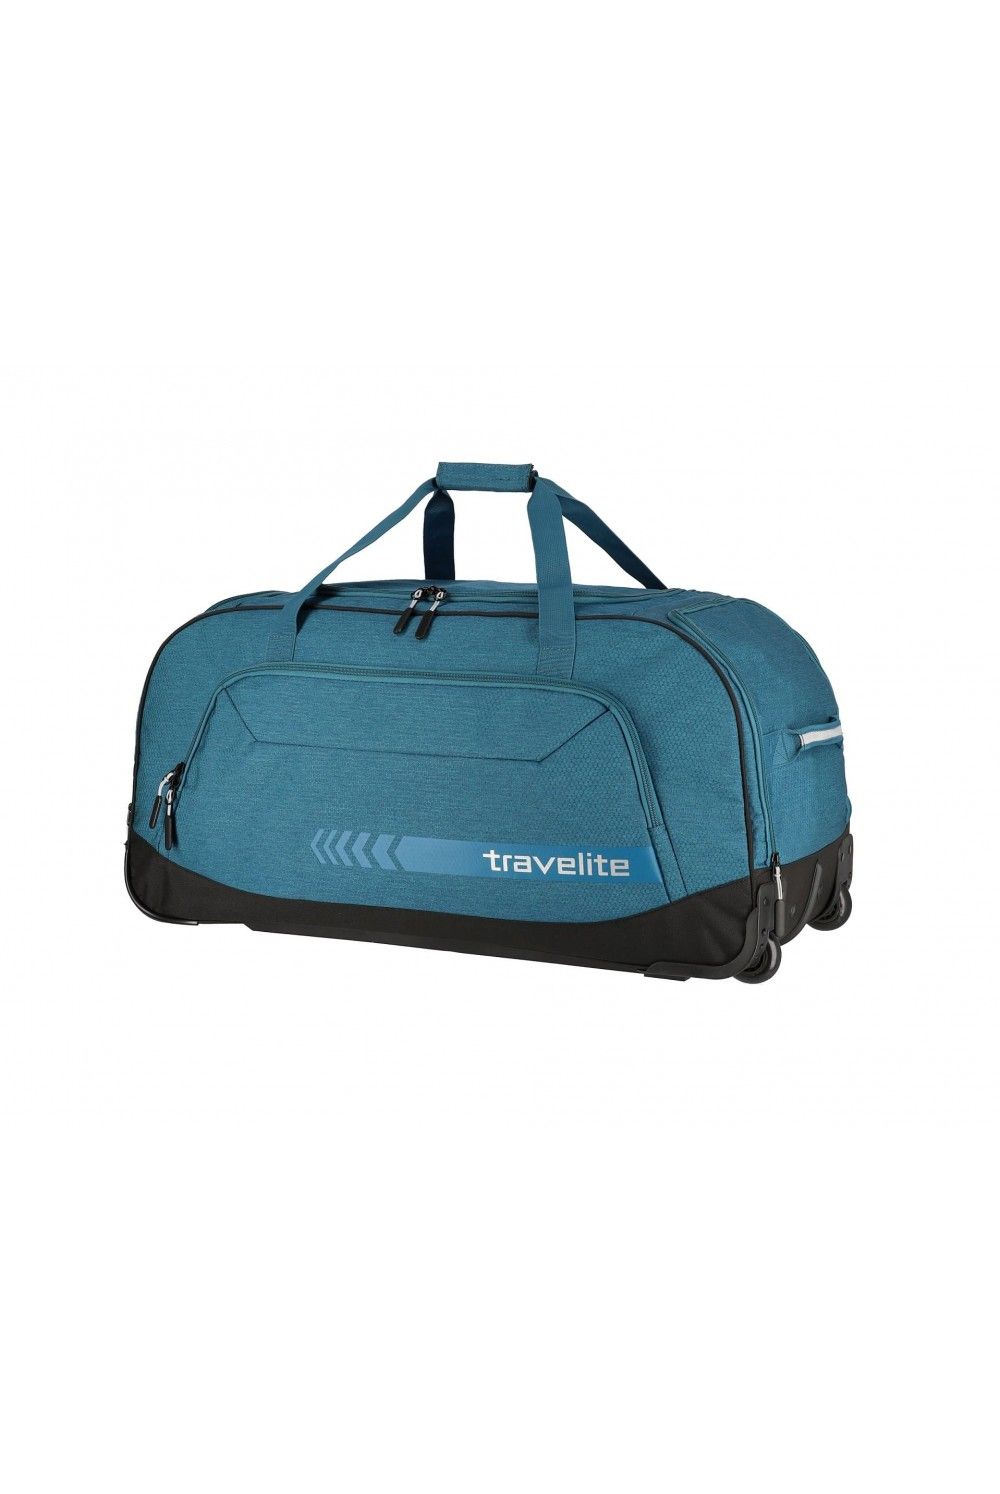 Travelite Kick Off travel bag XL with 2 wheels